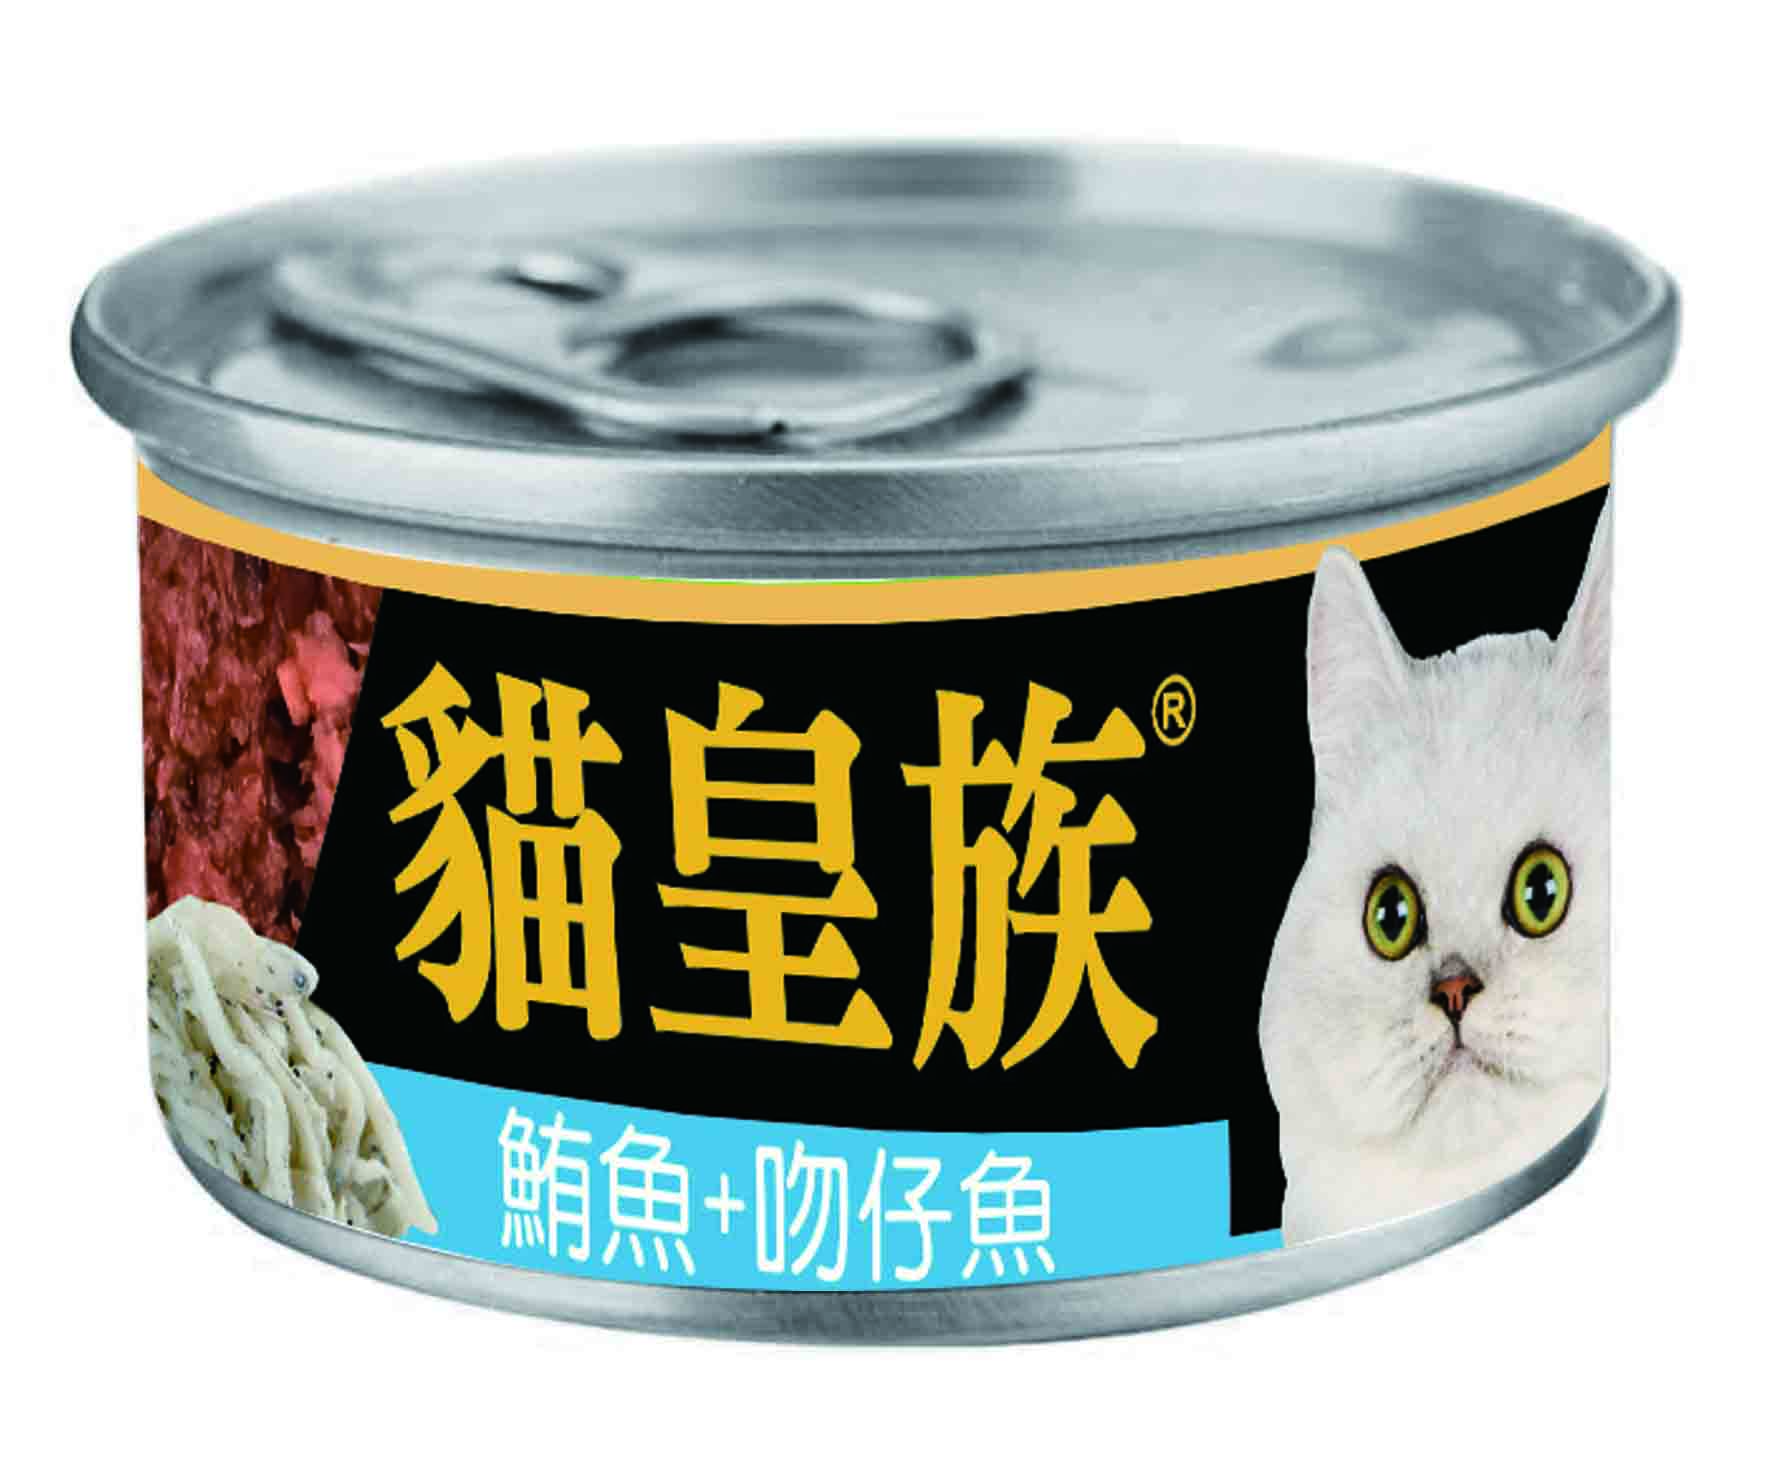 貓皇族®大缶 鮪魚+吻仔魚
Mao-Huang-Zu Big can Tuna red meat+ Shirasu